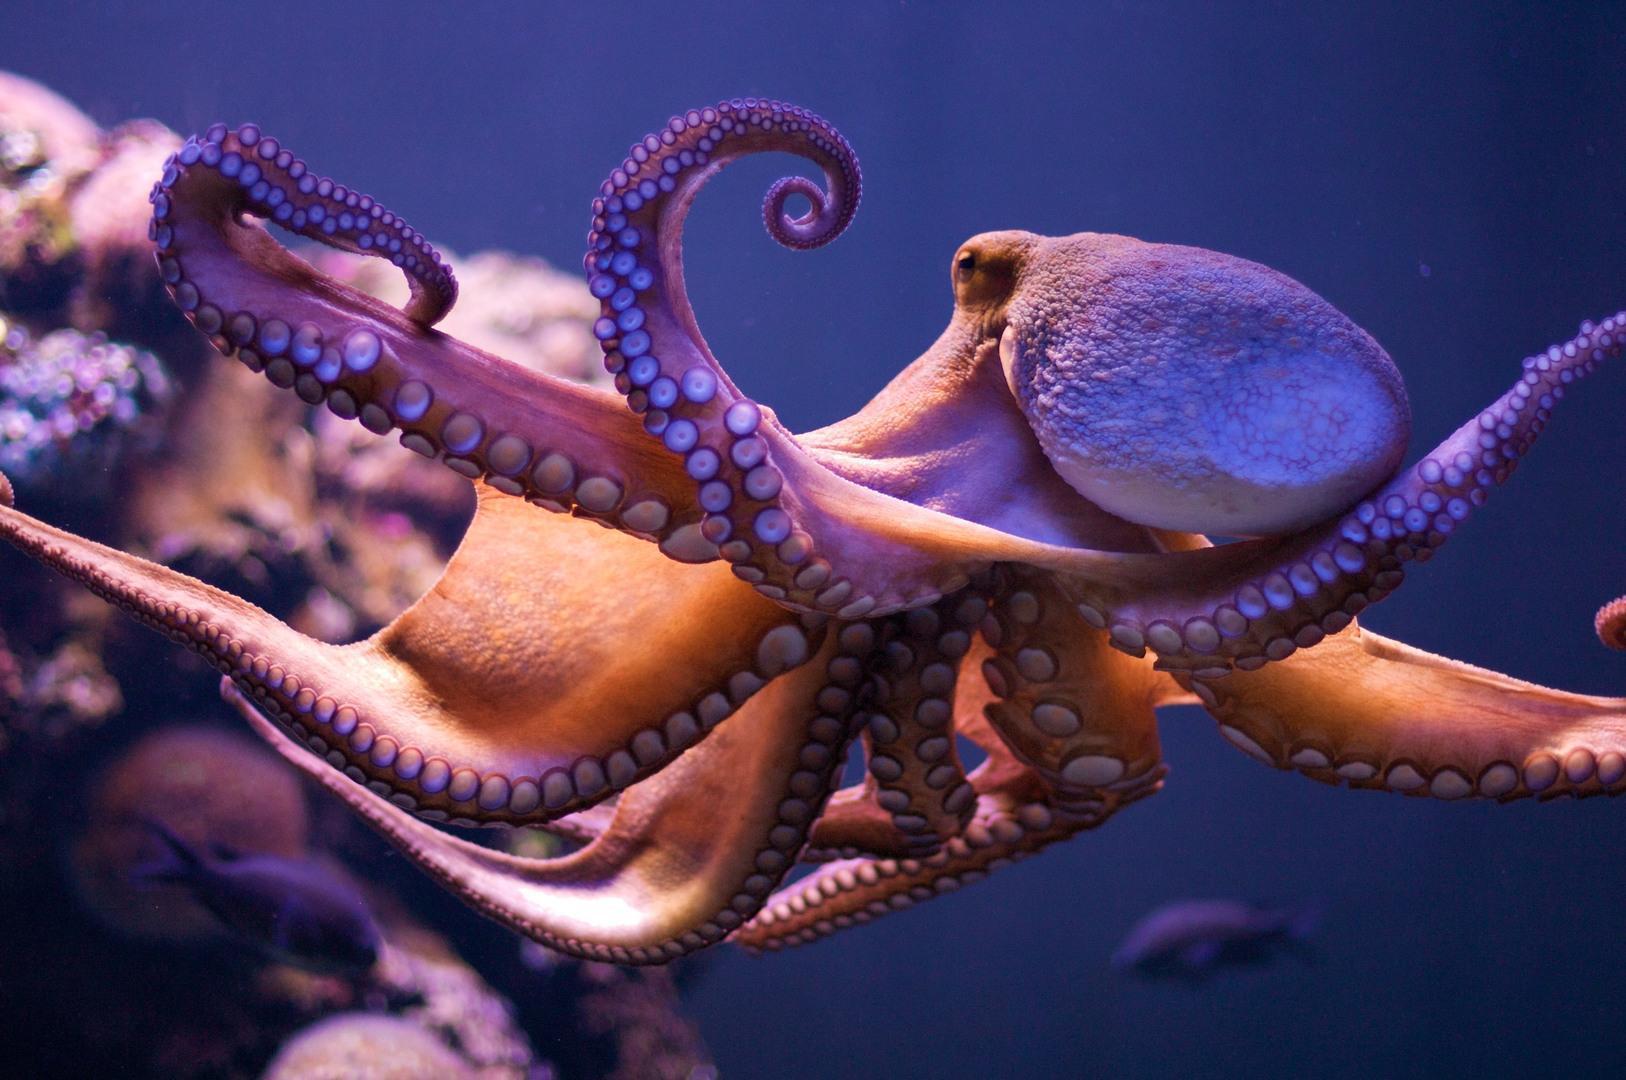 Octopus Animal Wallpaper Image Download